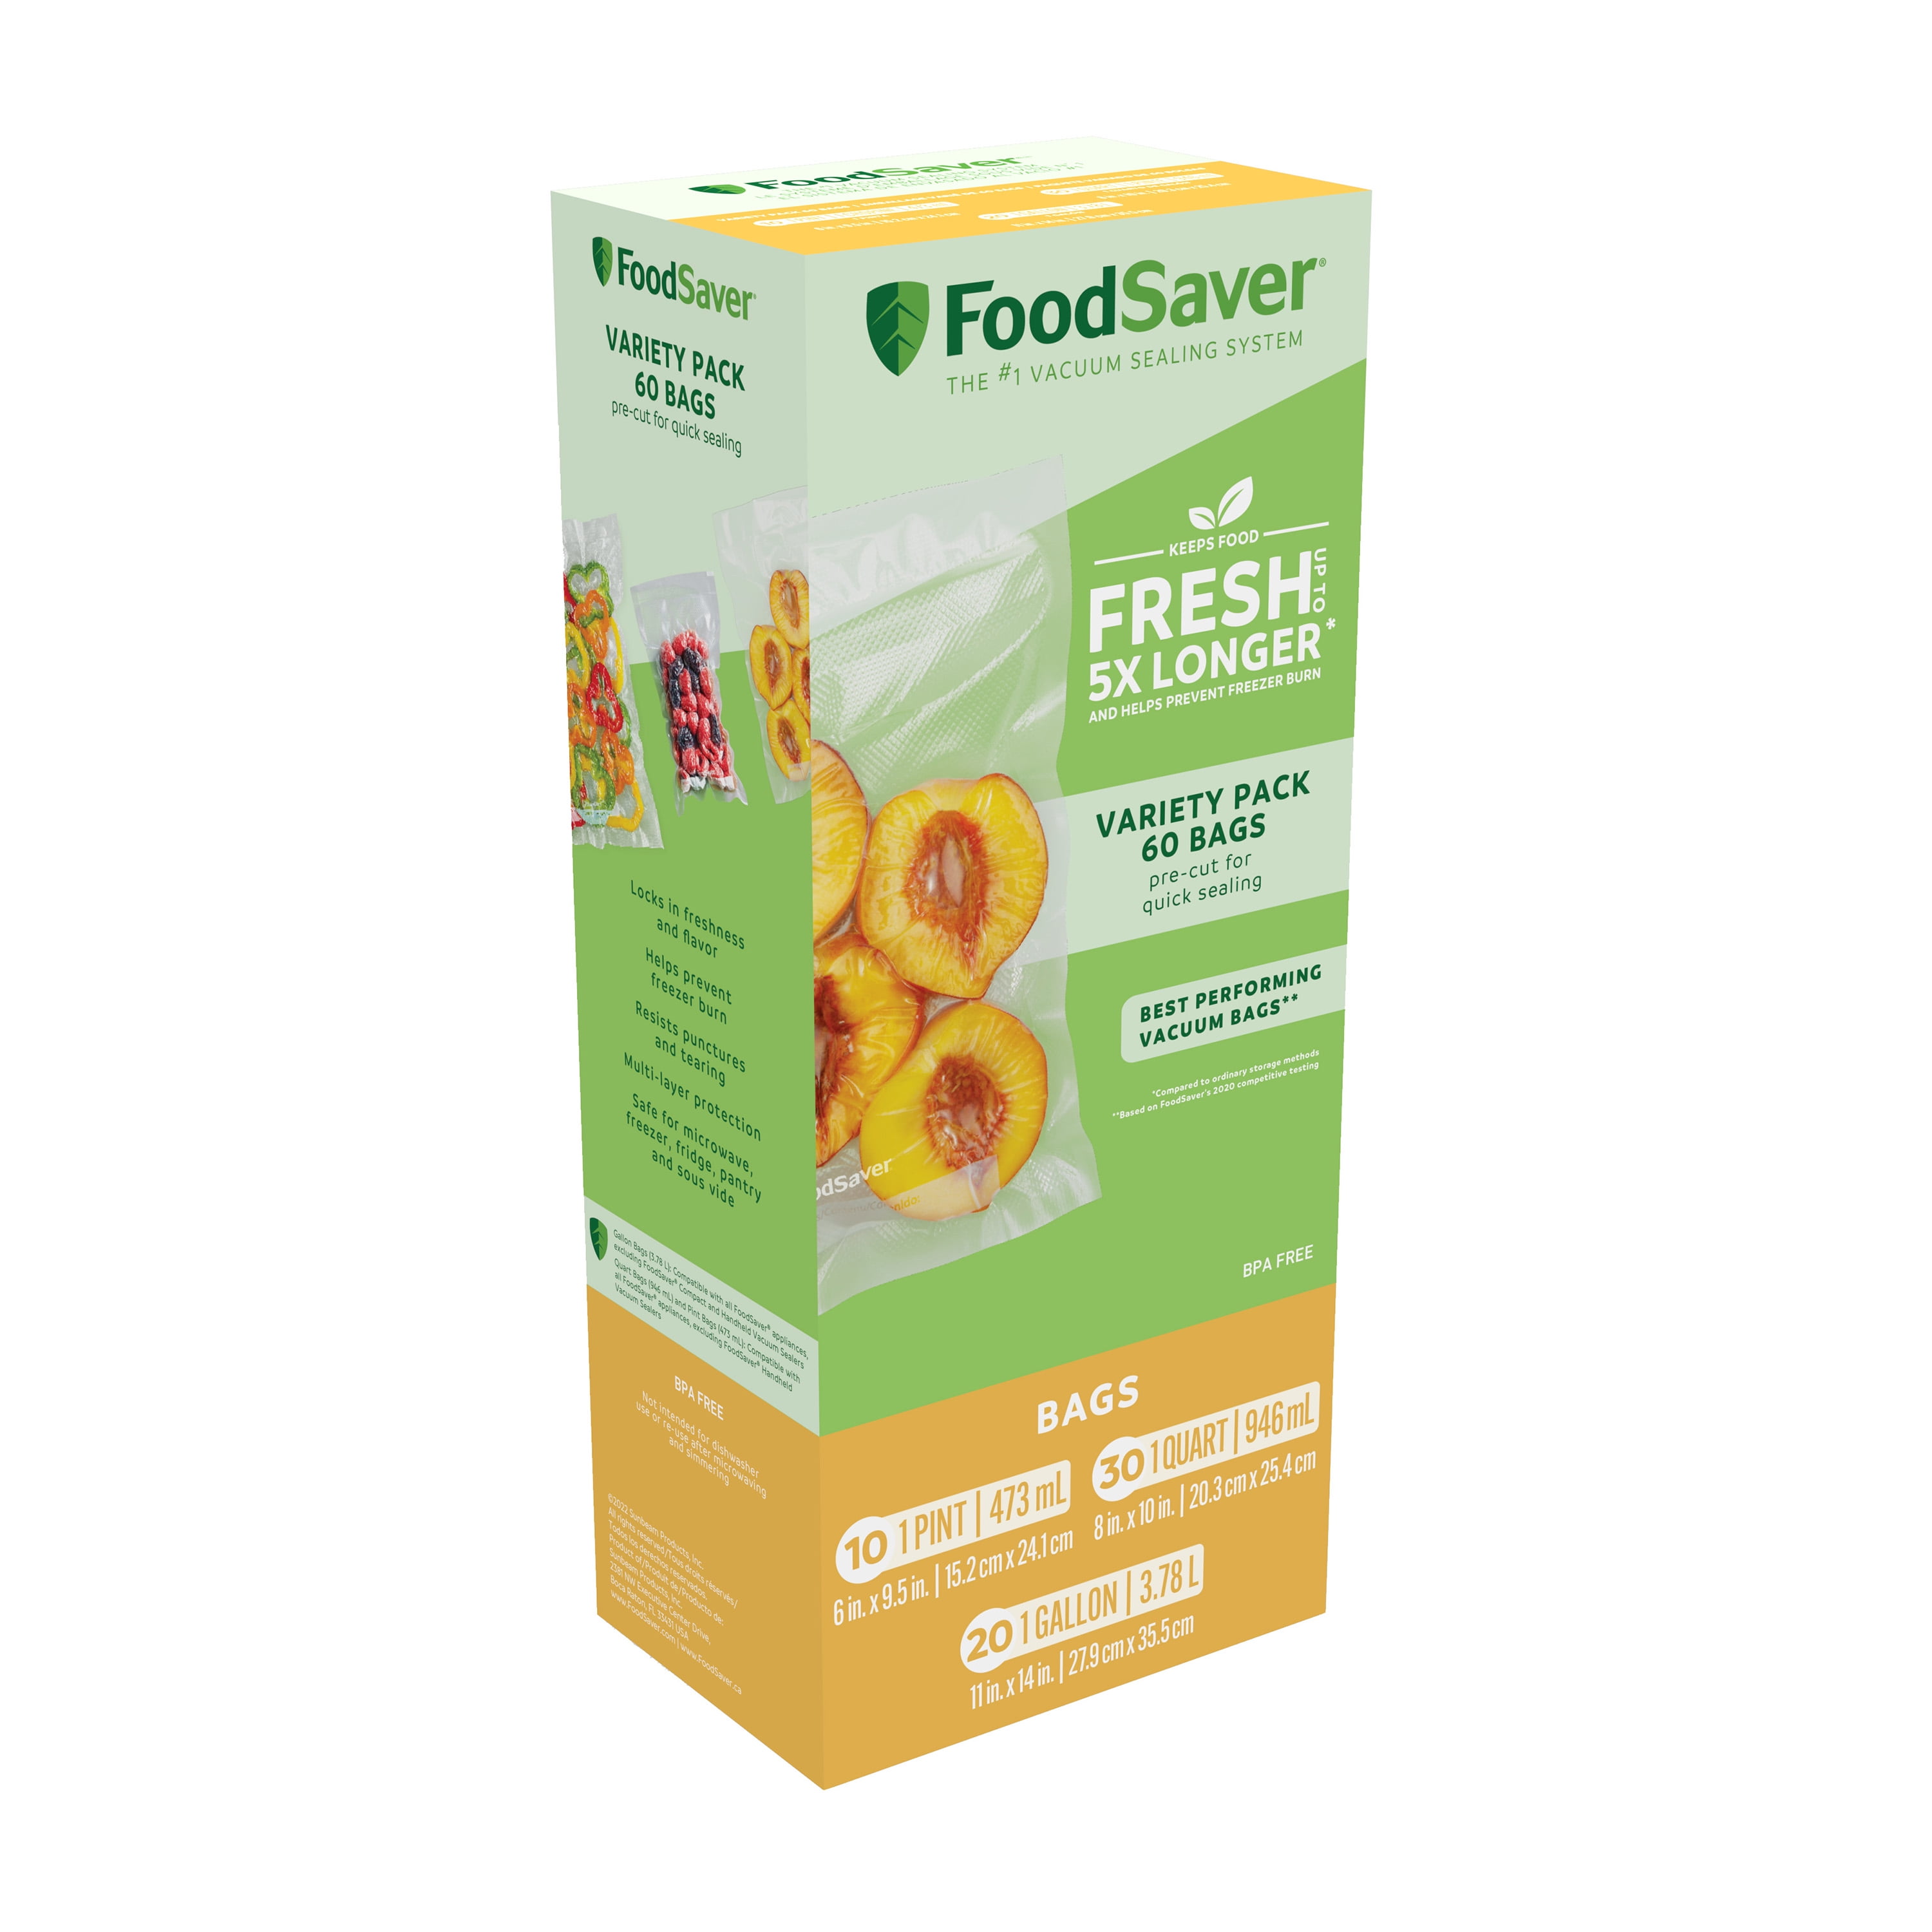 FoodSaver Multipack Bags Keeps Food Fresh Up To 5 Times Longer Than Alternatives